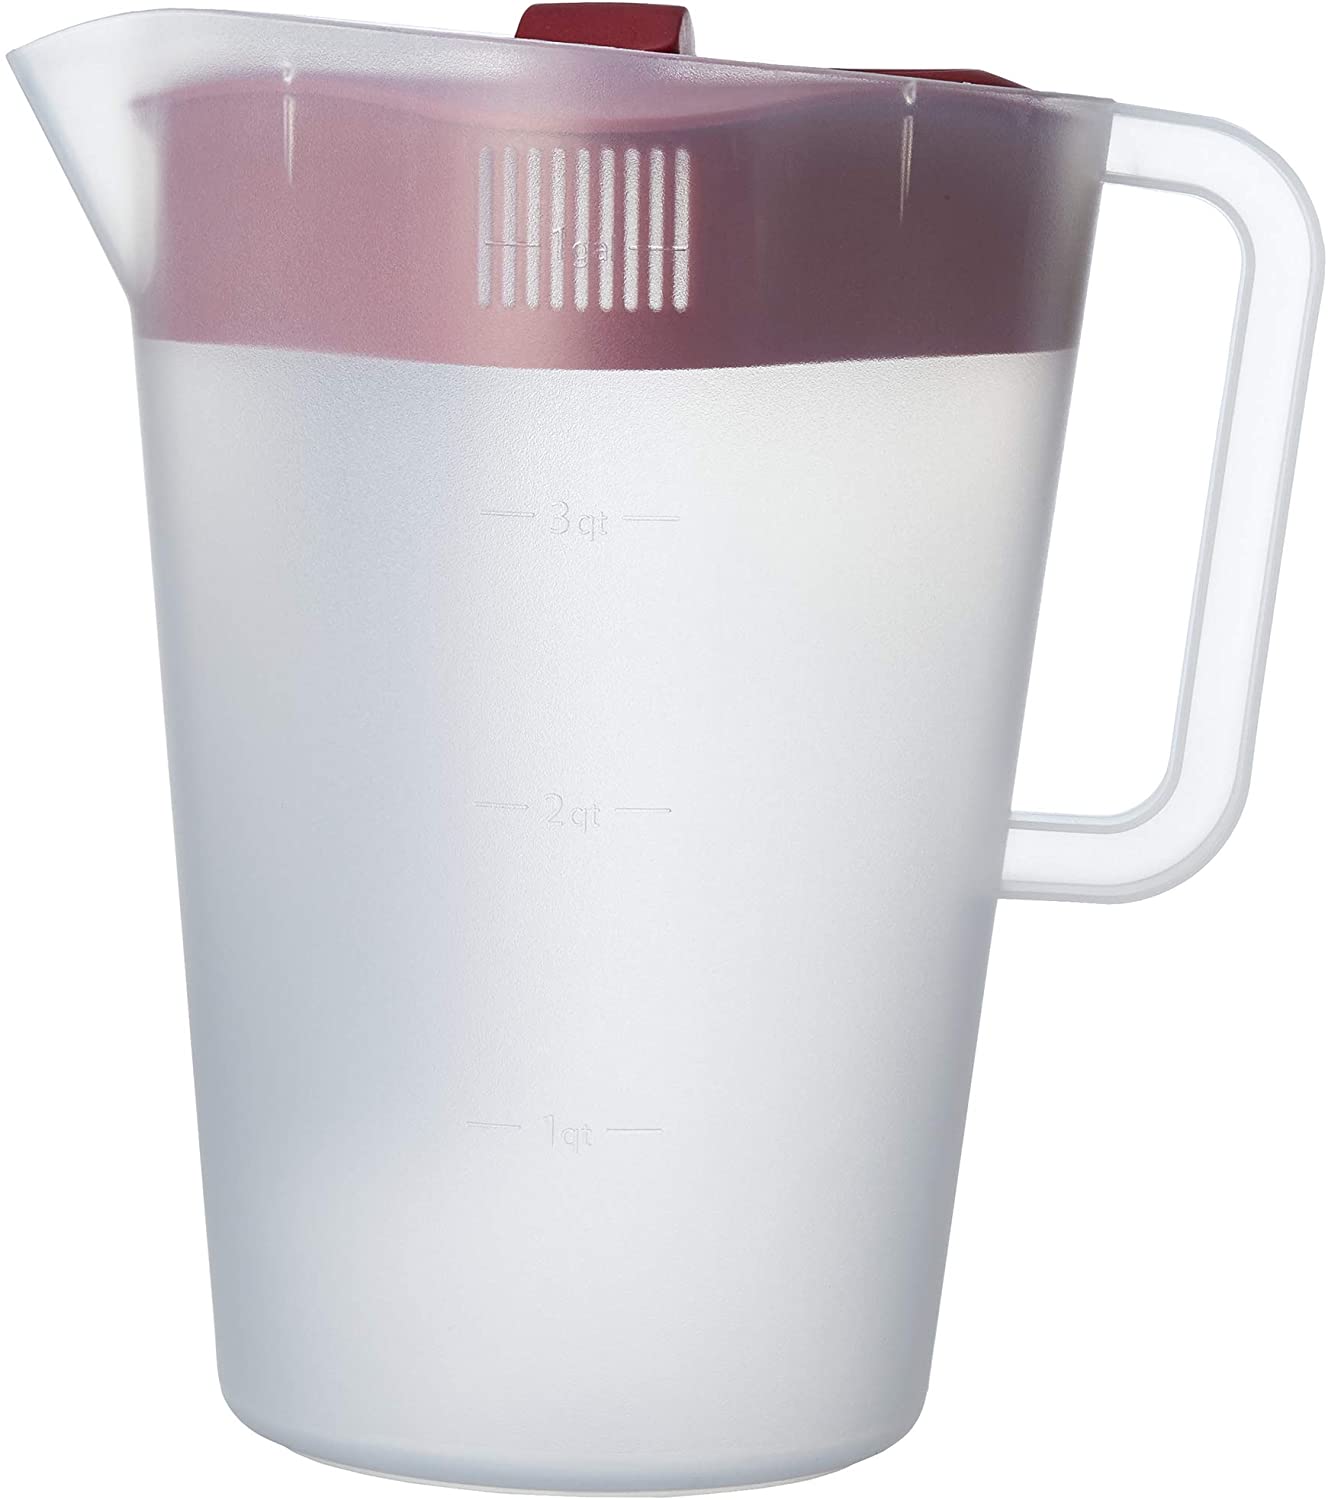 https://www.dontwasteyourmoney.com/wp-content/uploads/2021/04/goodcook-1-2-gallon-plastic-straining-pitcher.jpg